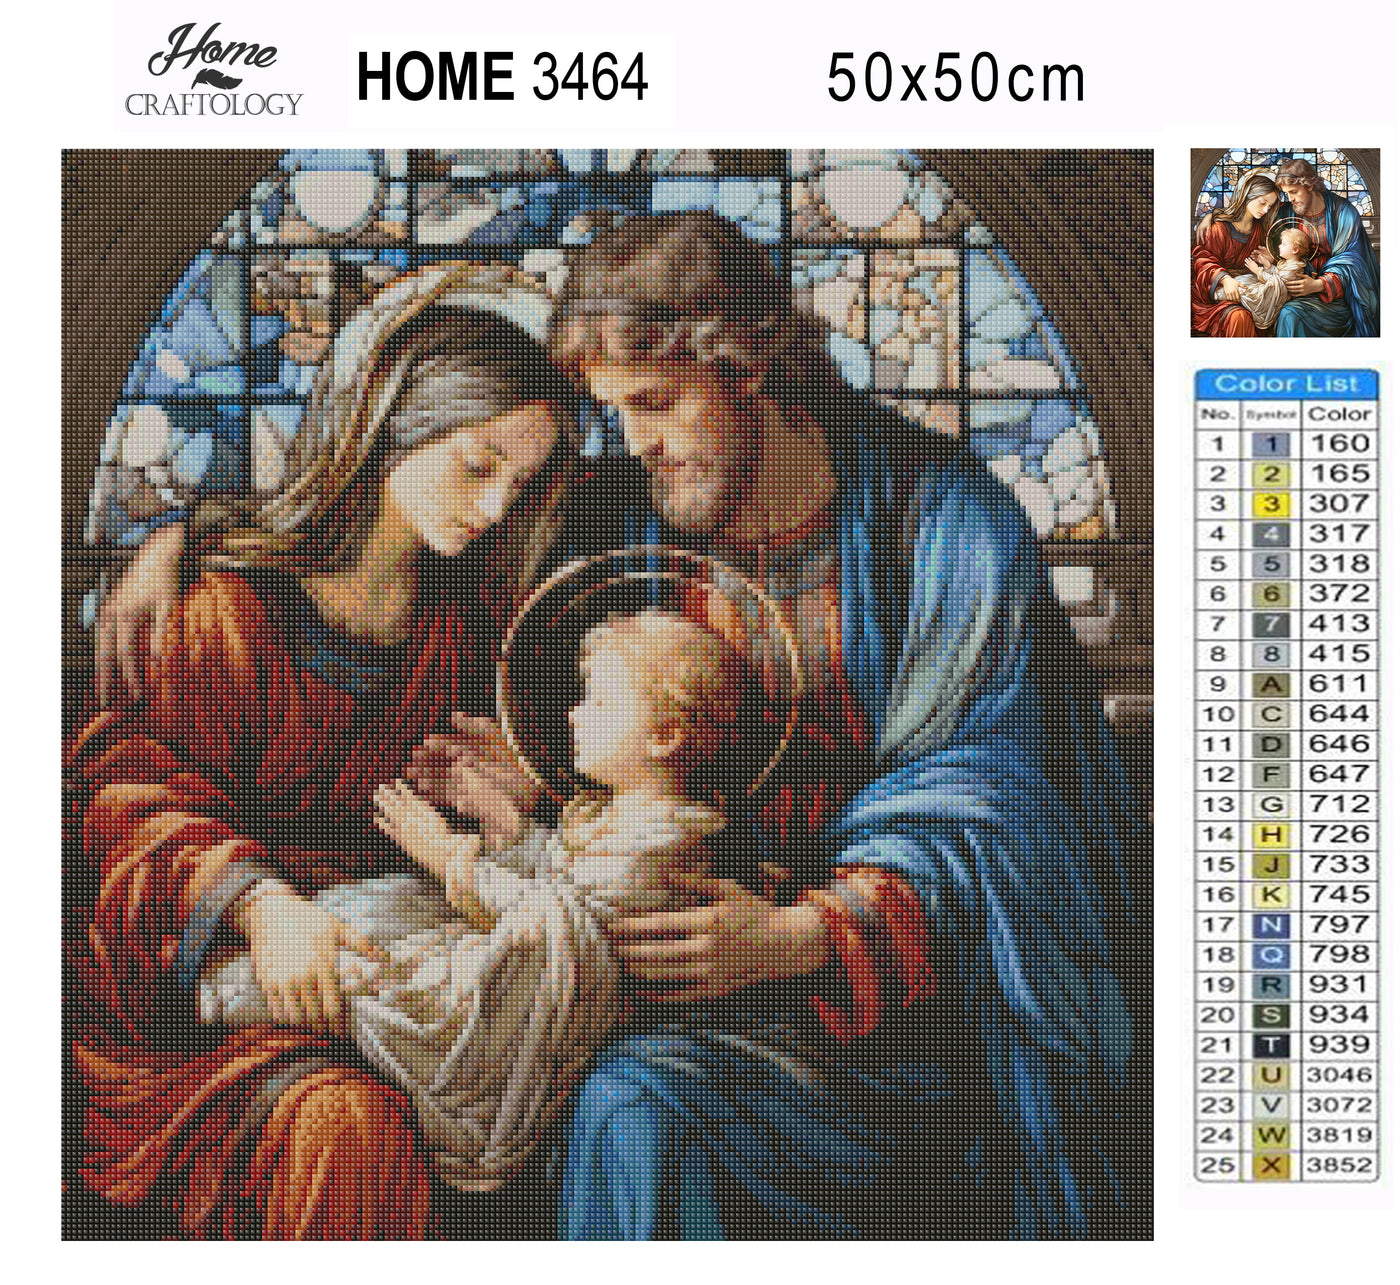 New! The Holy Family - Premium Diamond Painting Kit